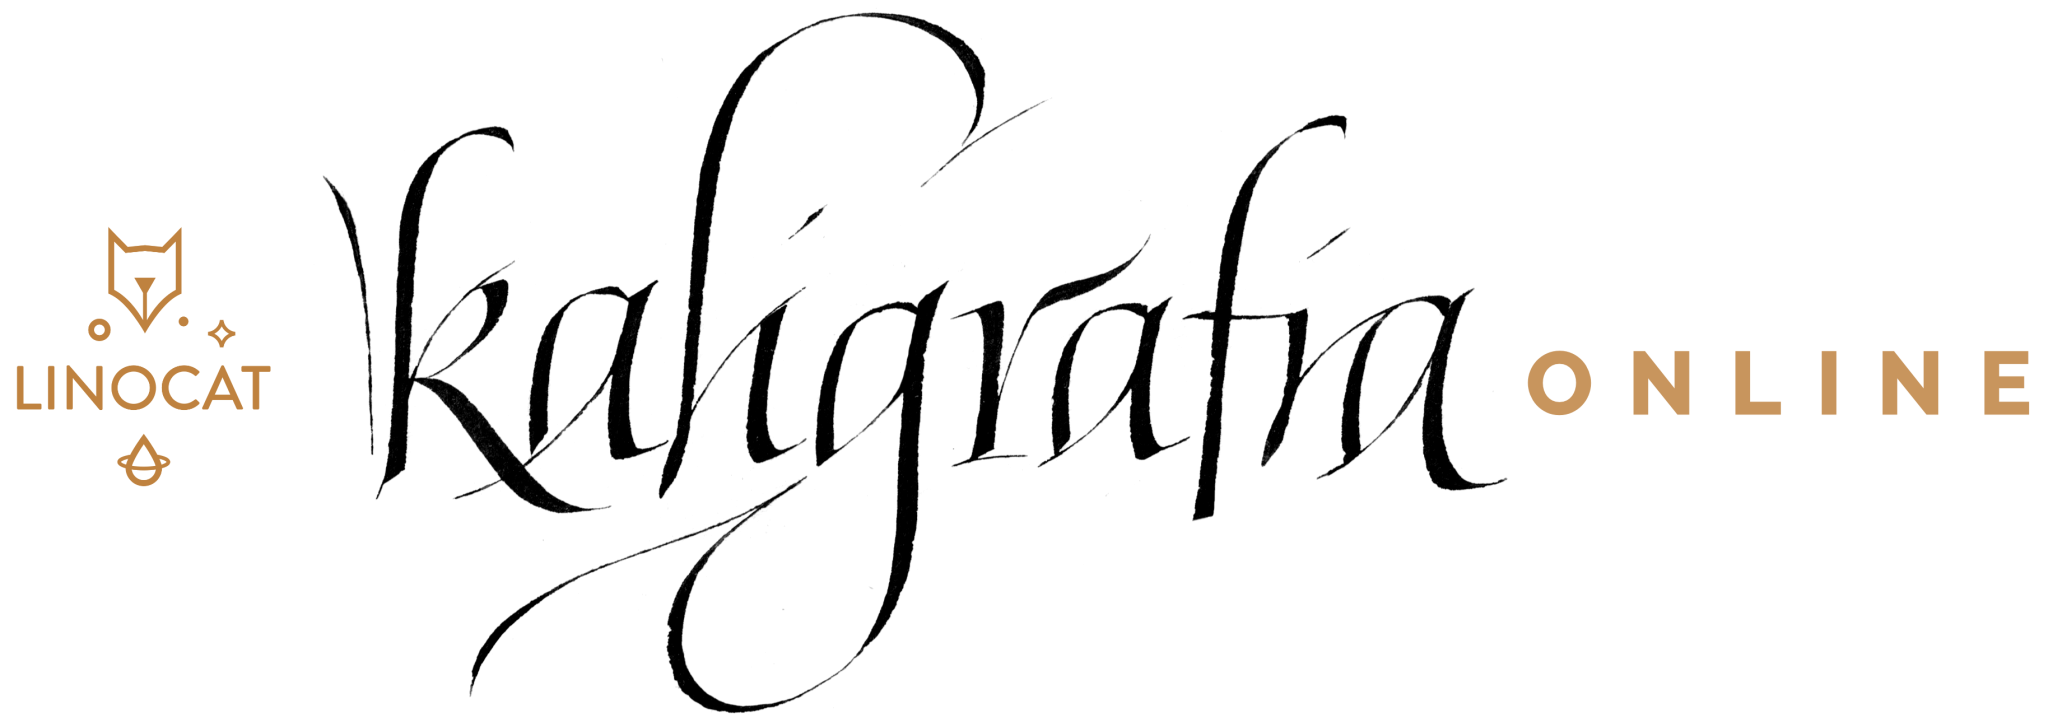 logo-kaligrafia-online